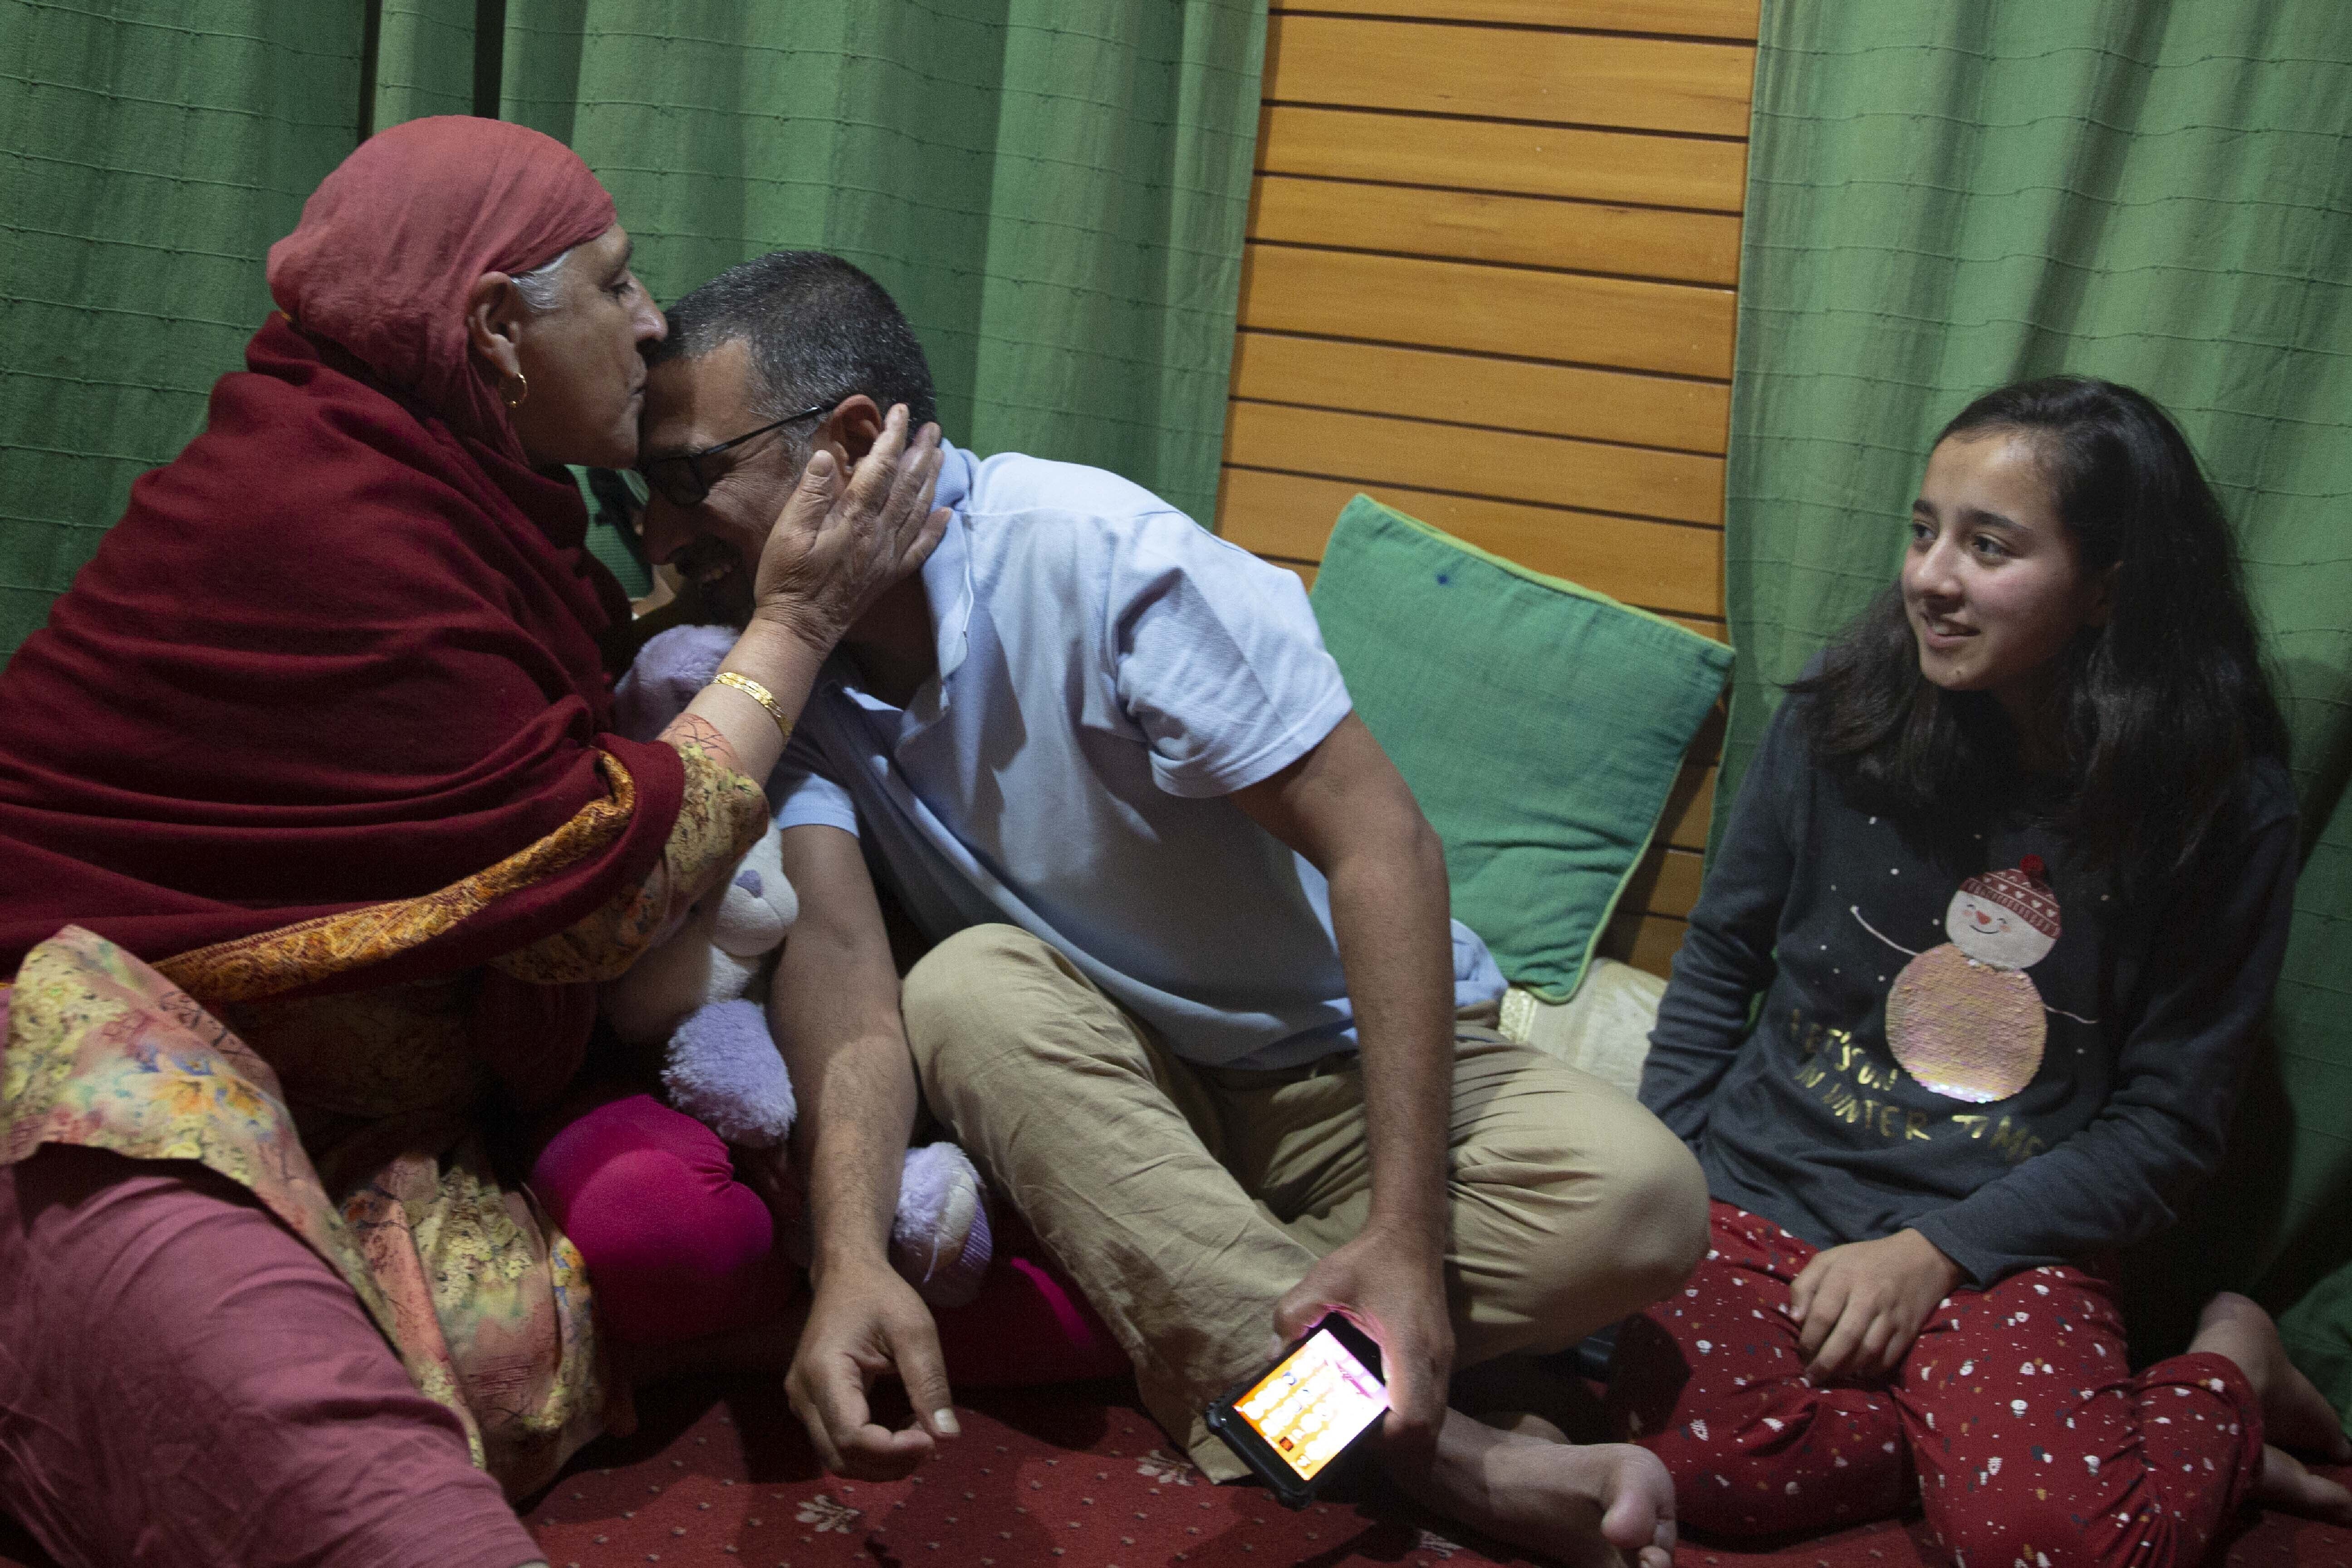 Dar Yasin celebrates with his family at his home in Srinagar